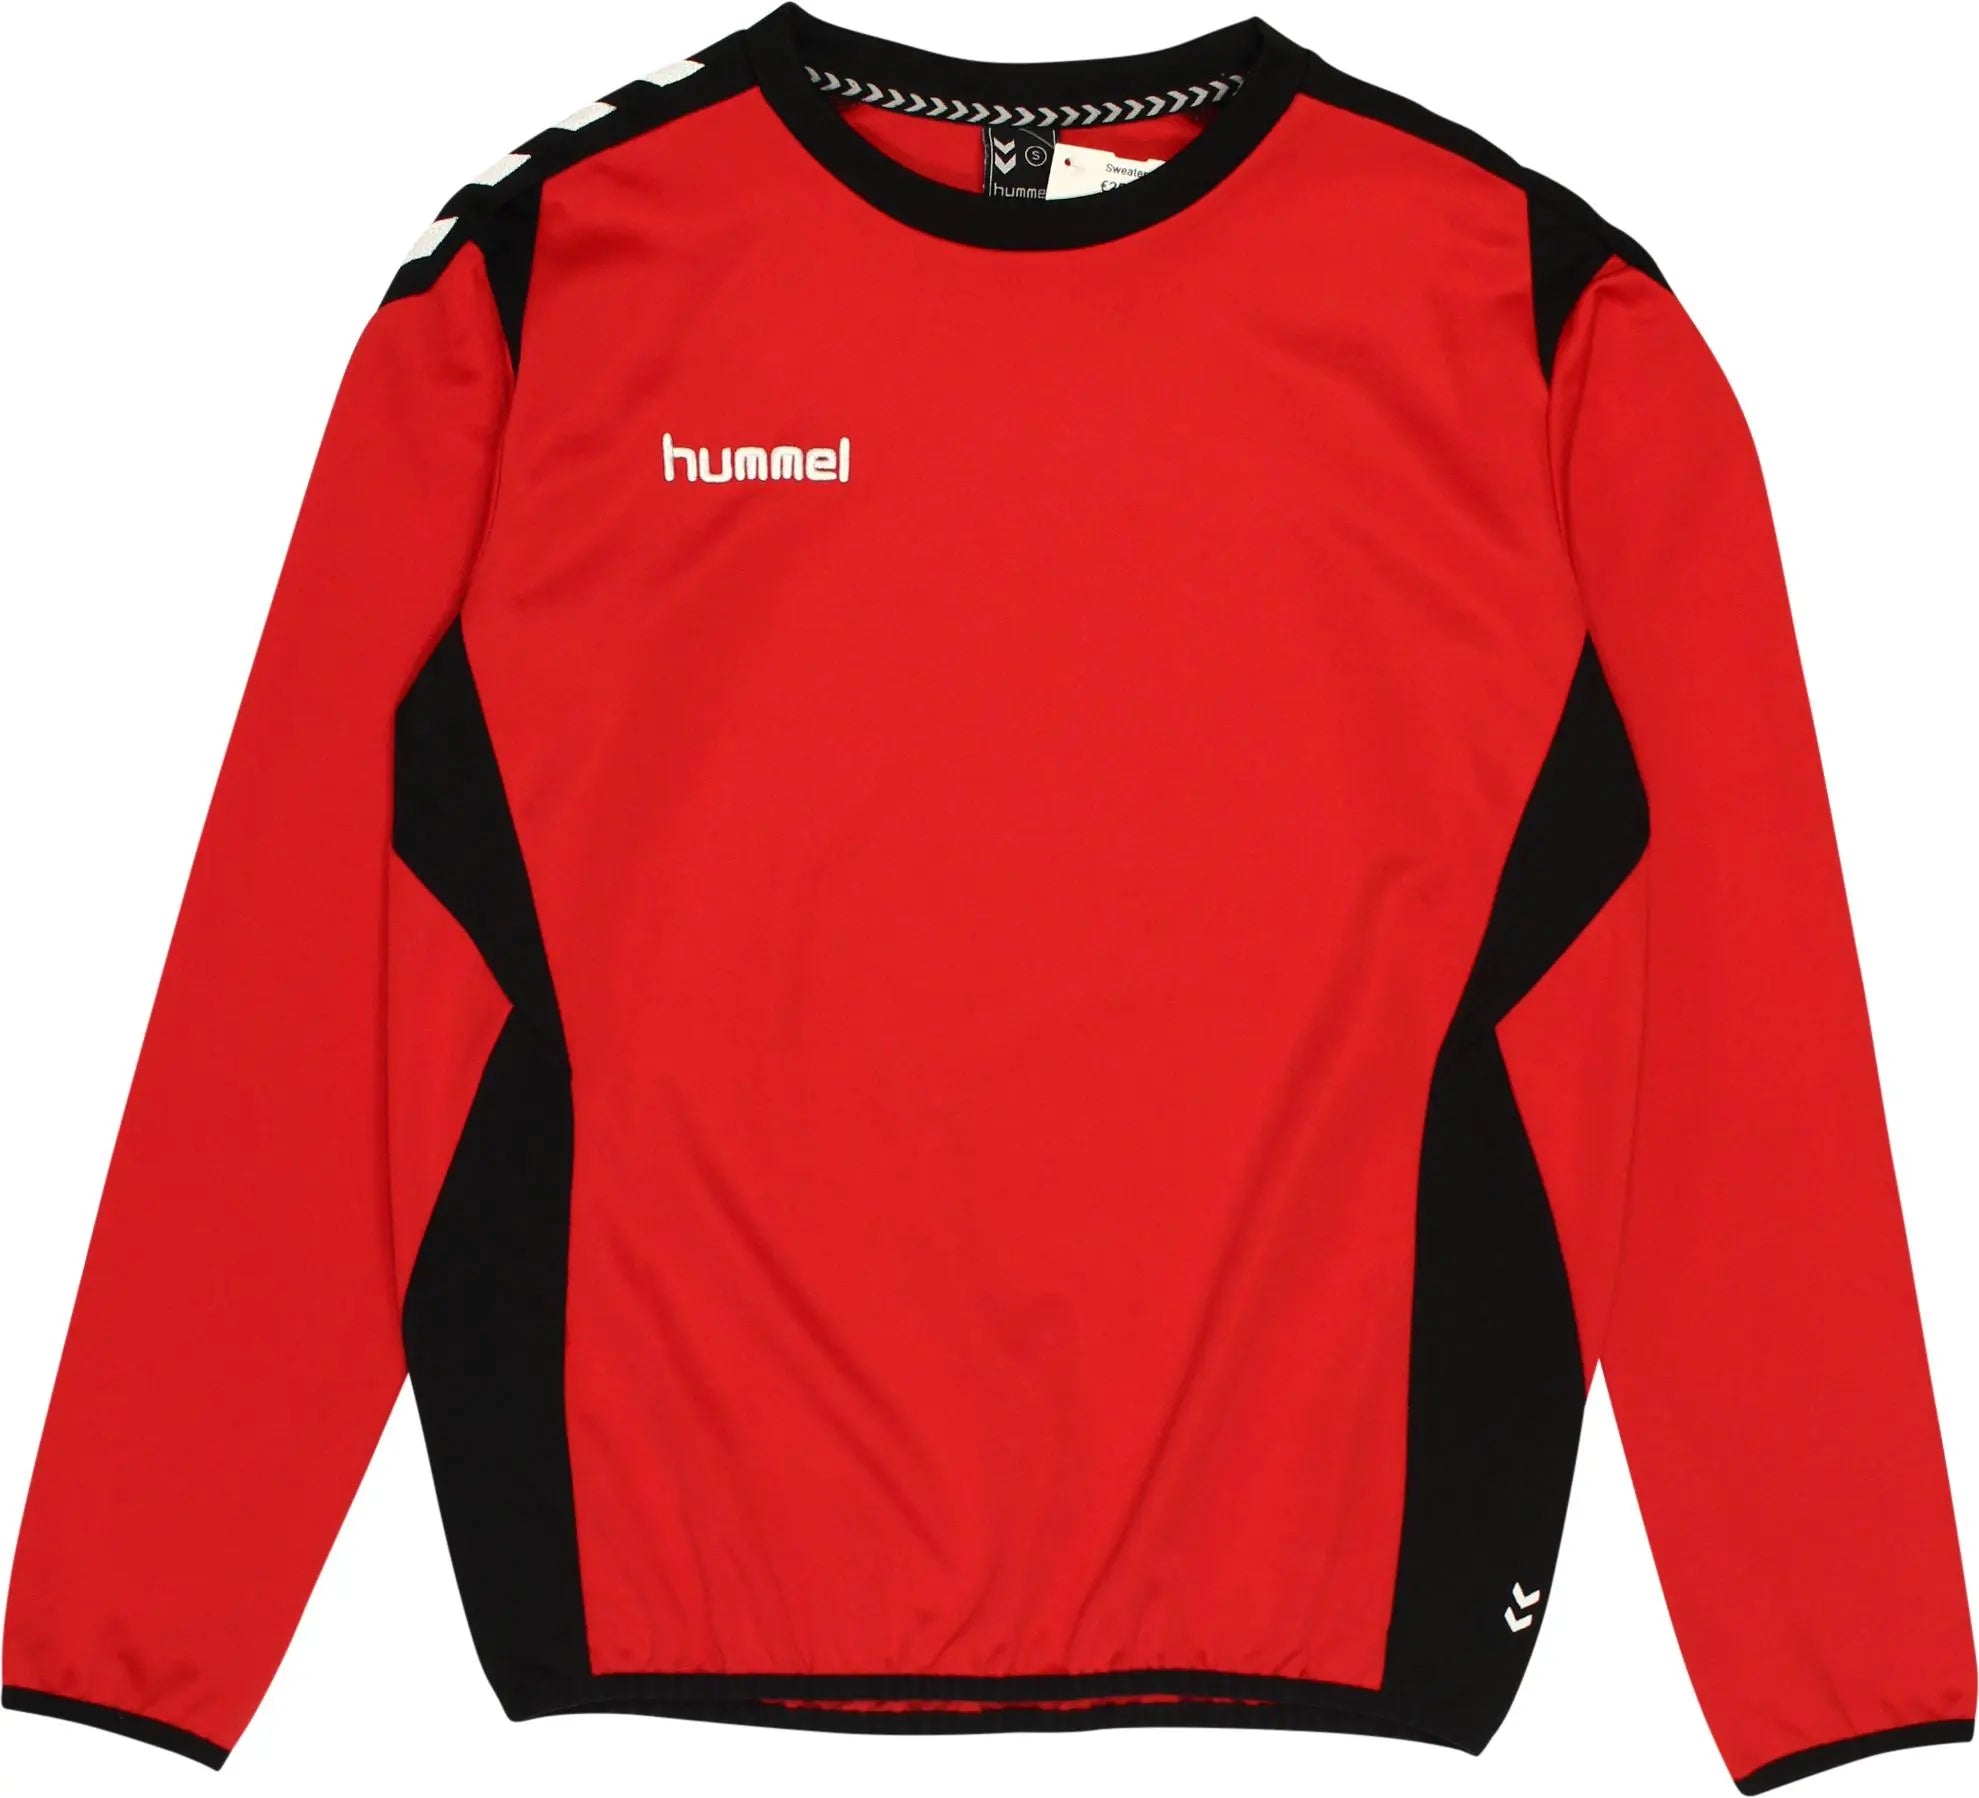 Hummel - Sport Shirt- ThriftTale.com - Vintage and second handclothing